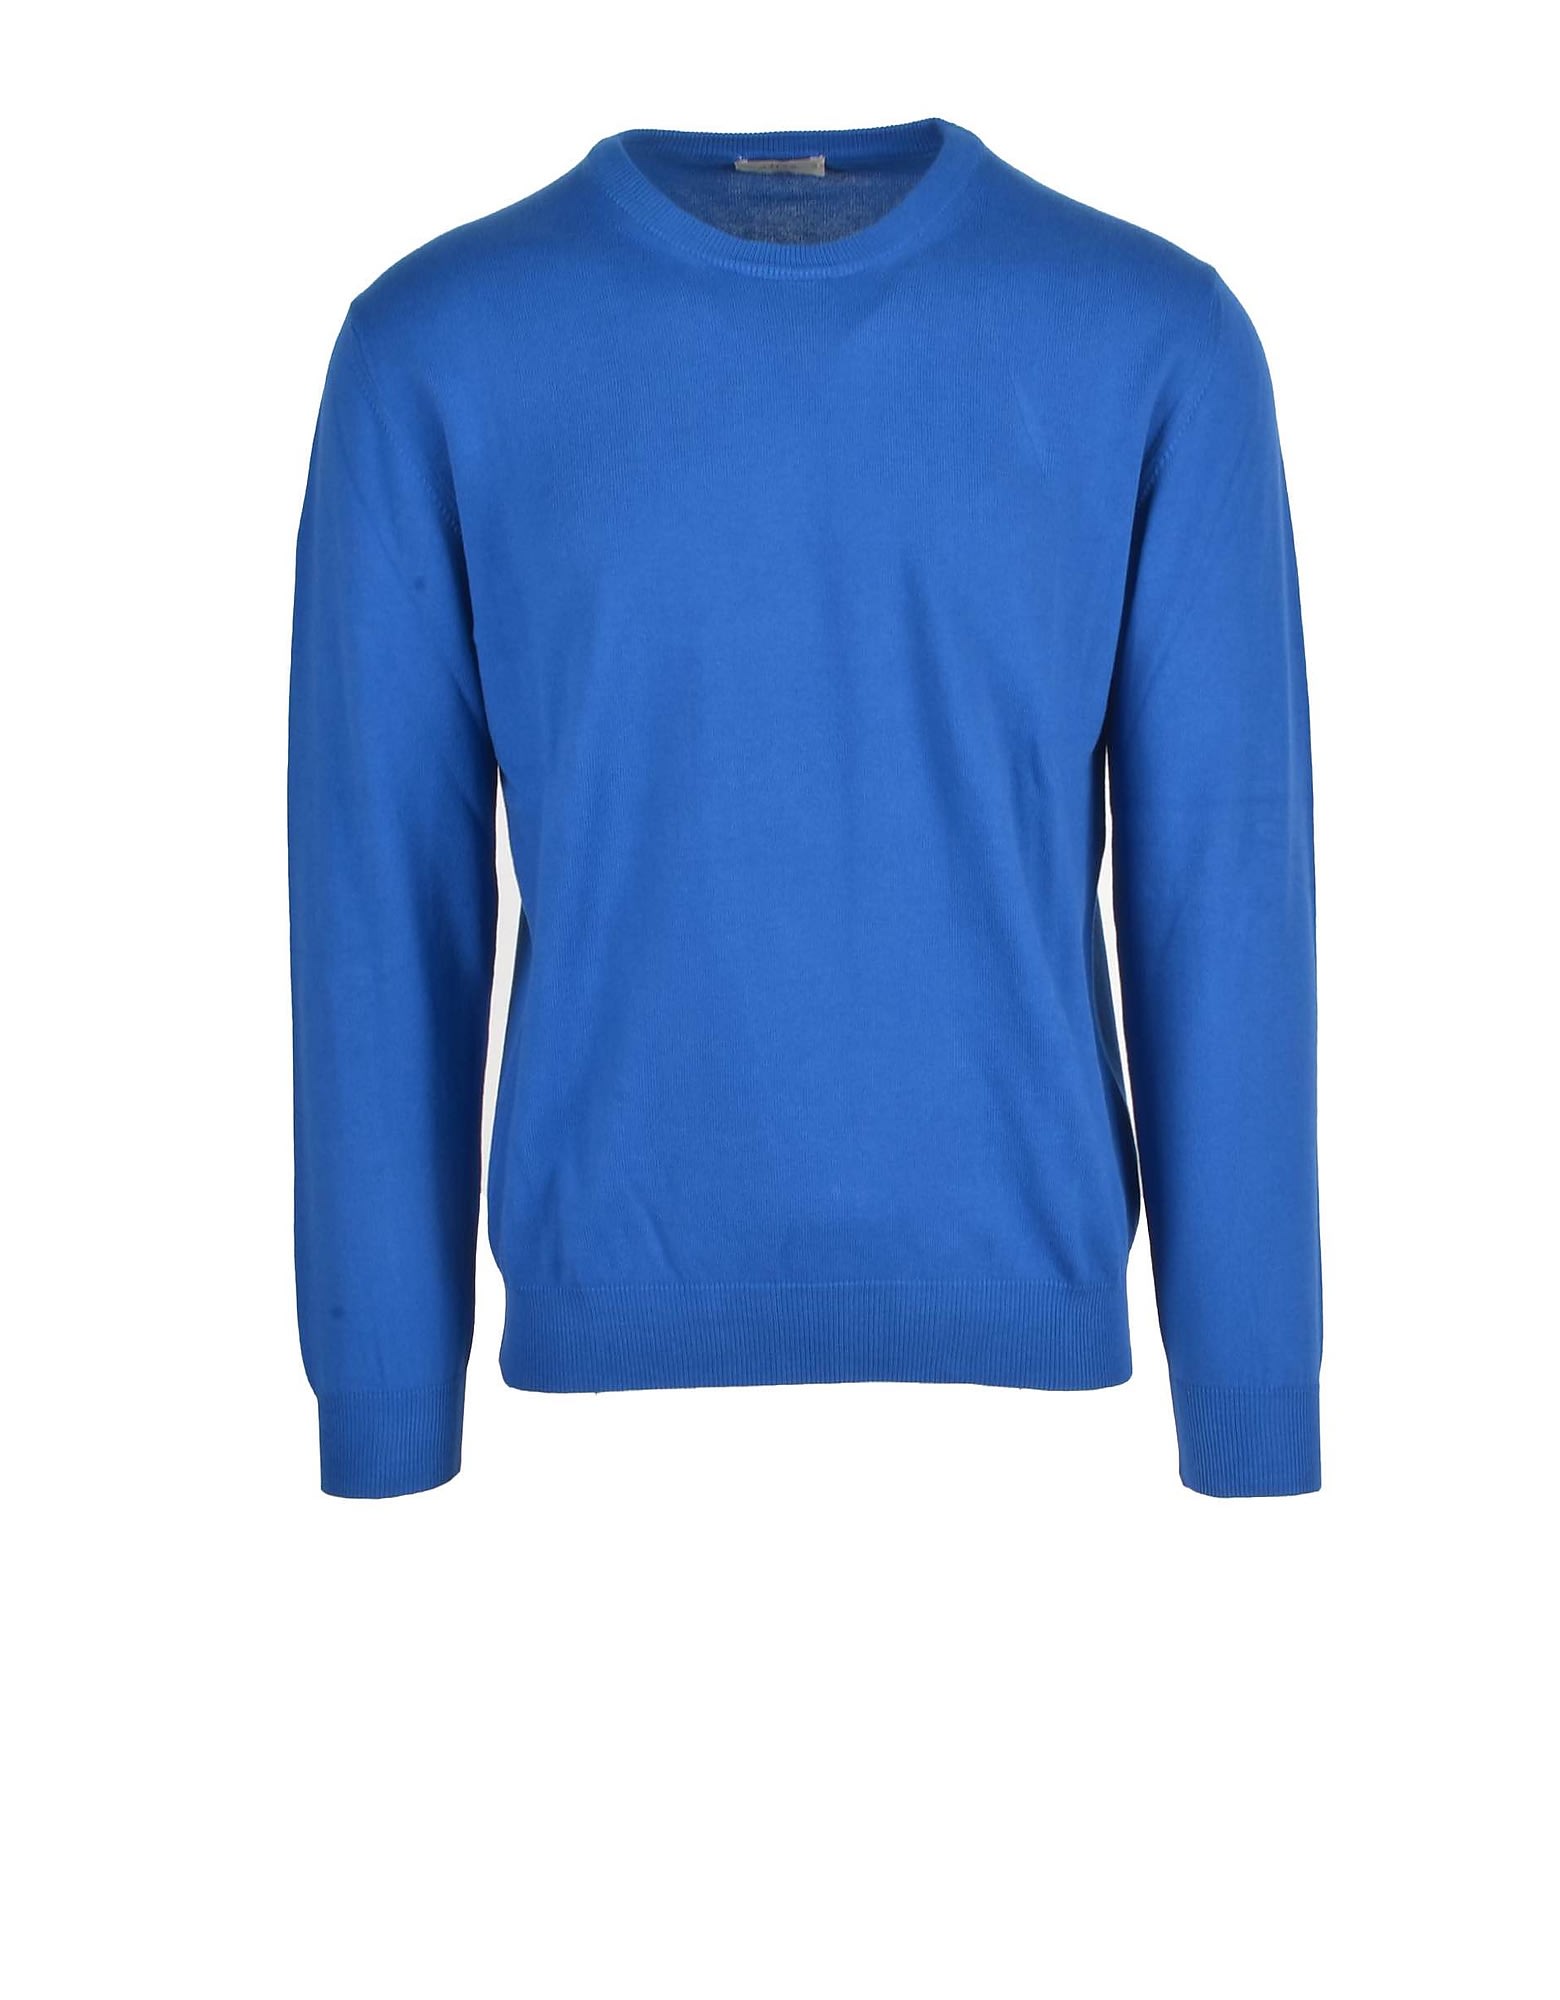 Altea Mens Light Blue Sweater